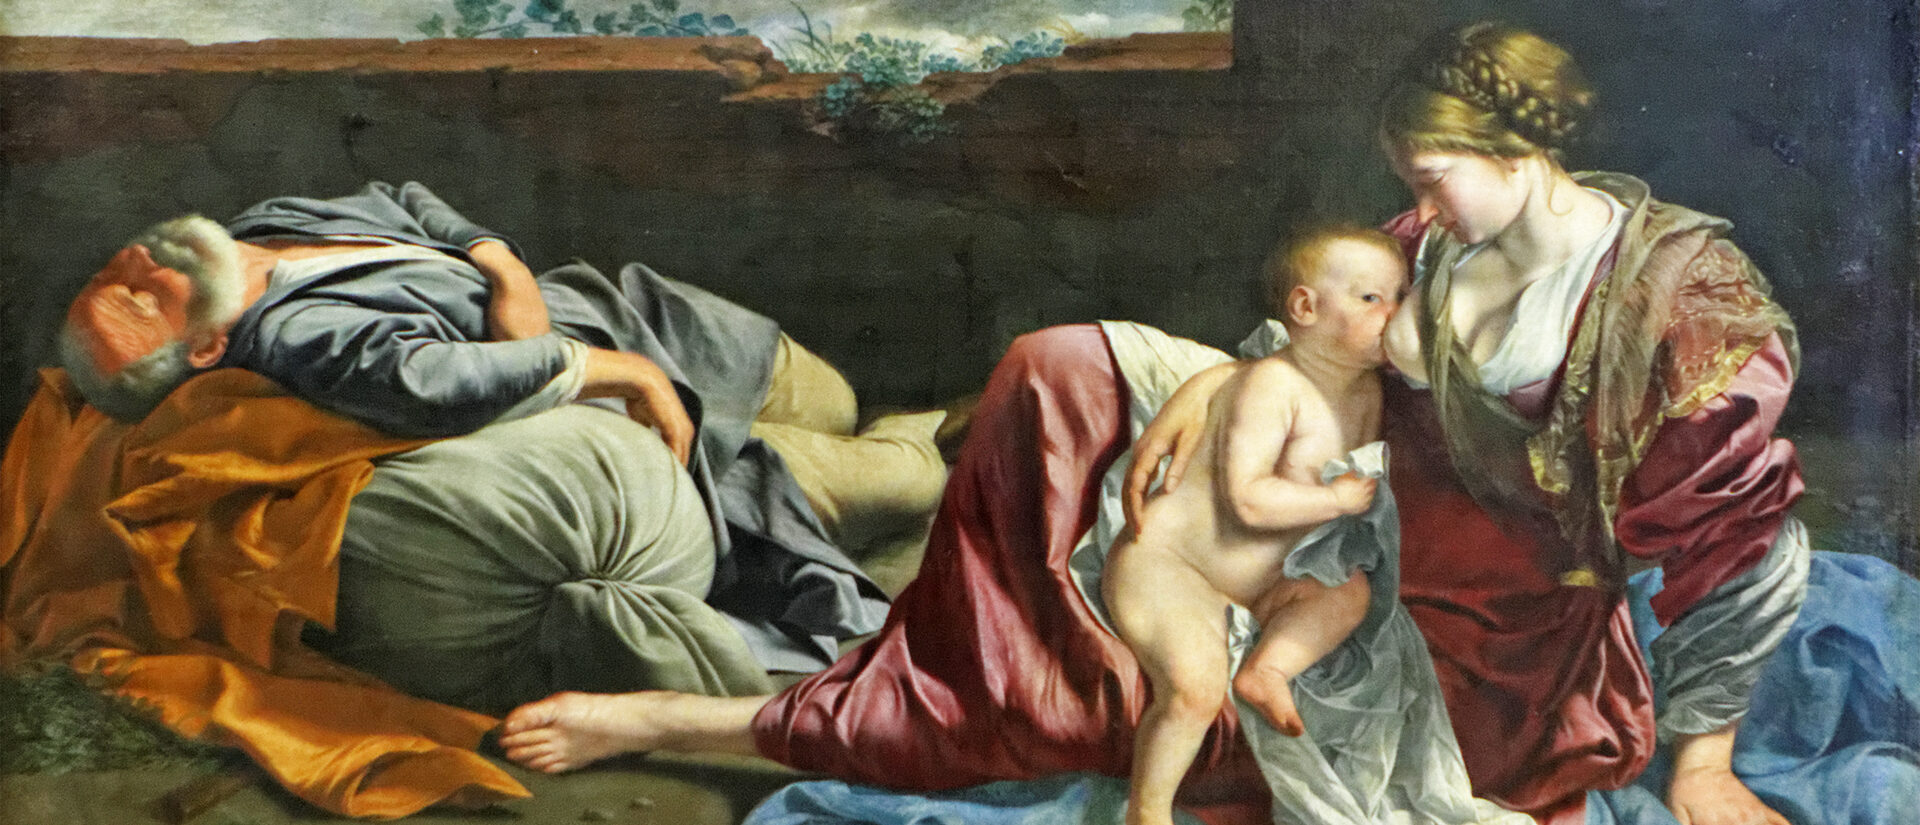 Le repos de la Sainte Famille pendant la fuite en Egypte - Orazio Gentileschi, XVIIe s. | LDD